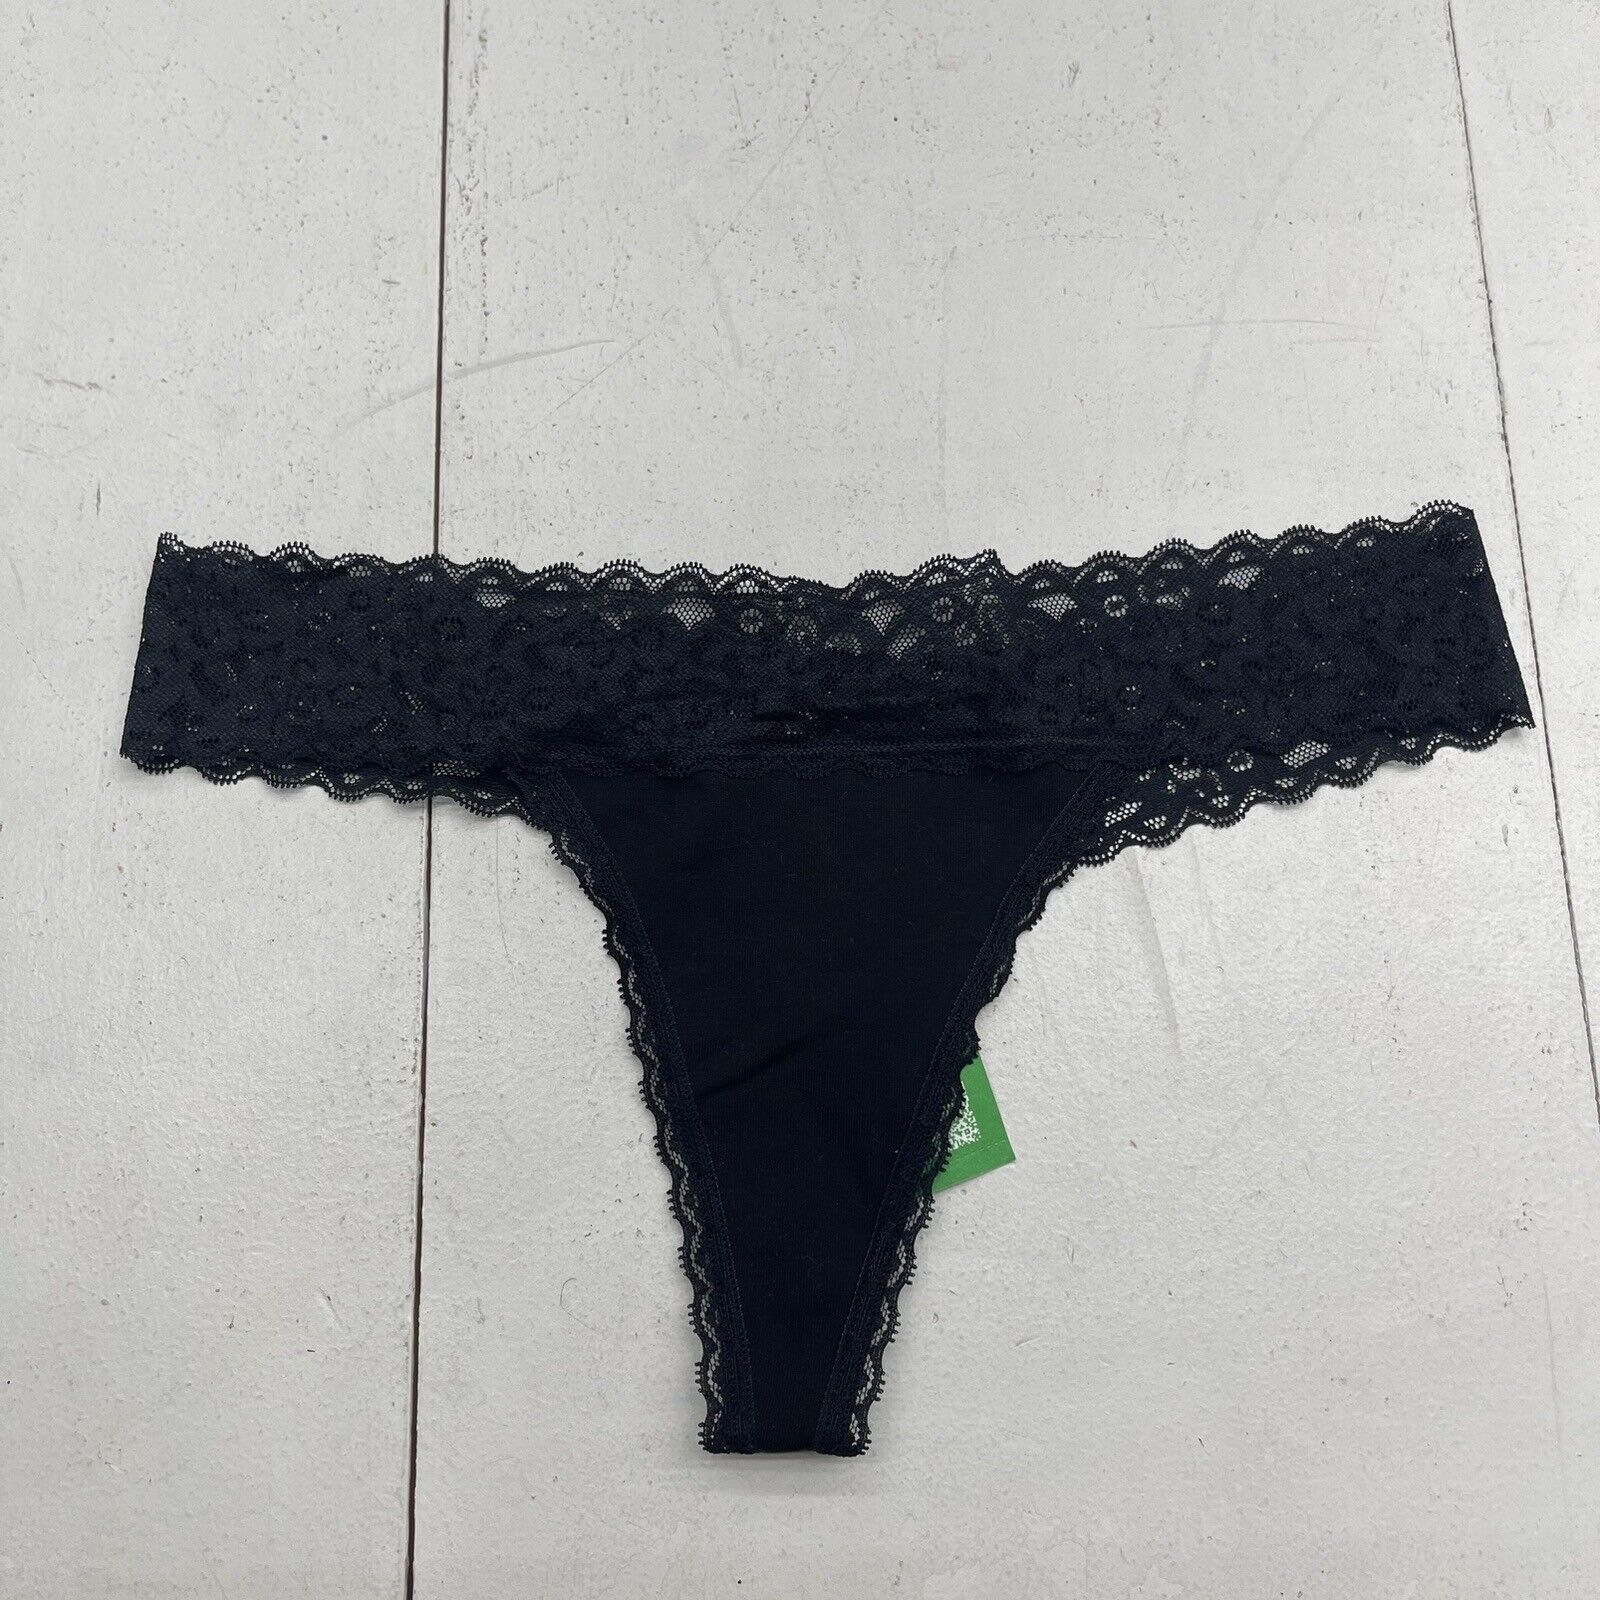 Gap Black Lace Trim Tong Underwear Women's Size Medium New - beyond exchange